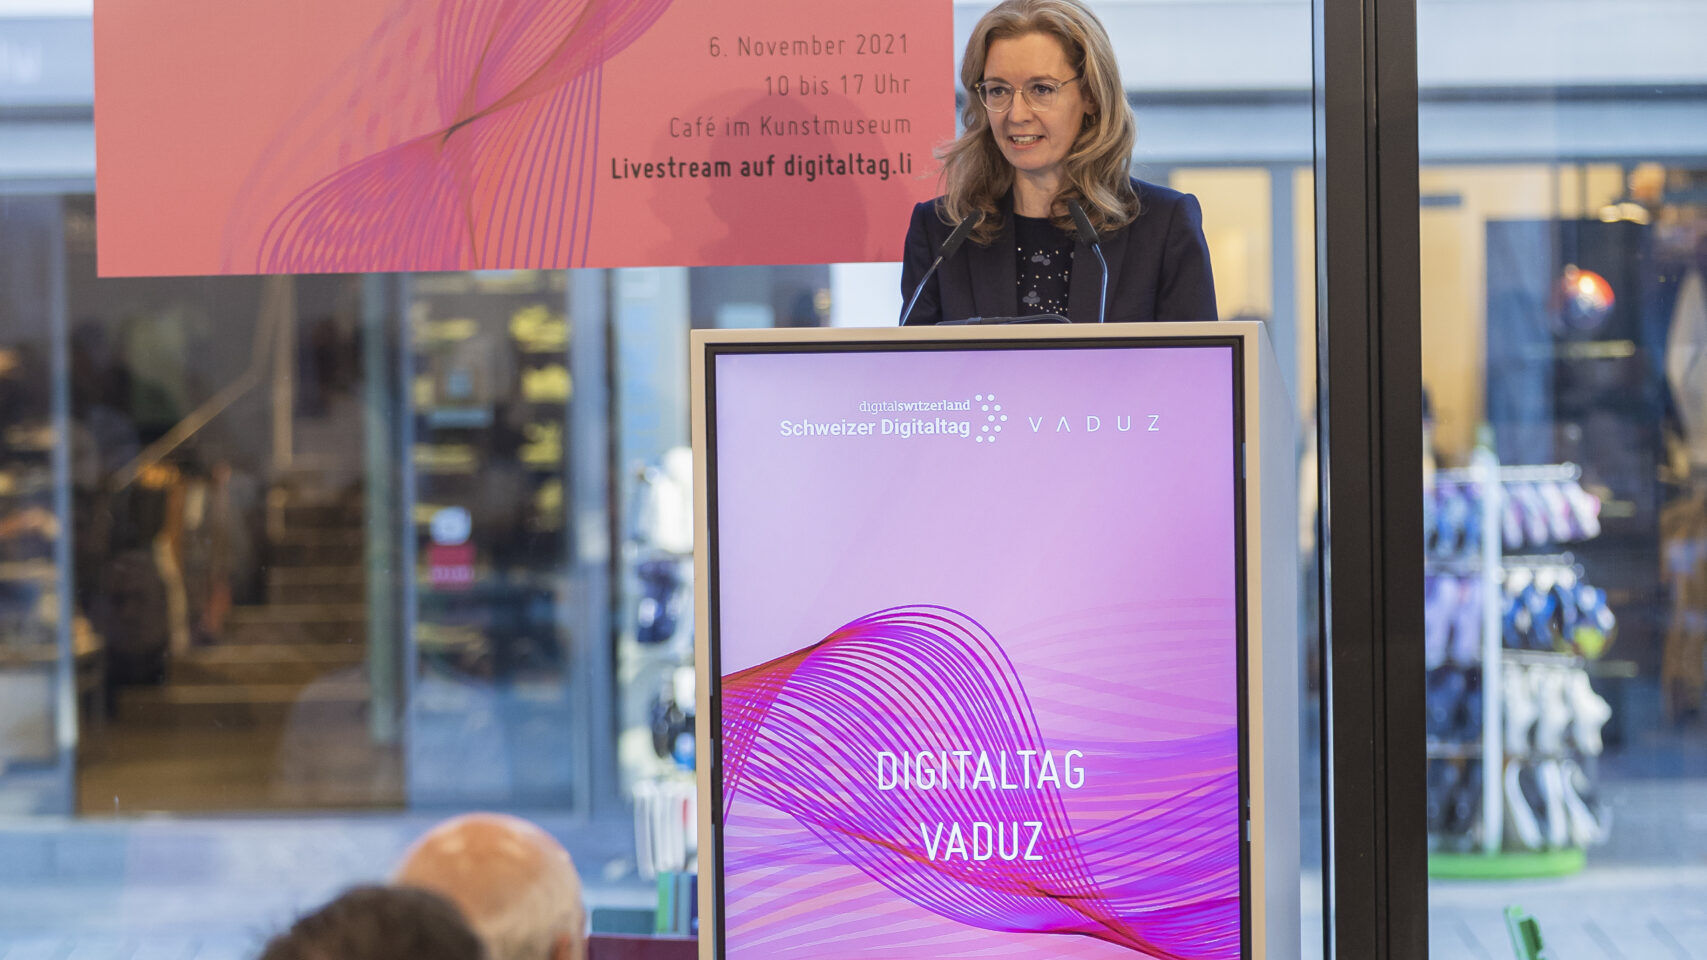 "Digitaltag Vaduz", რომელსაც მიესალმა ლიხტენშტეინის სამთავროს დედაქალაქის Kunstmuseum-მა შაბათს, 6 წლის 2021 ნოემბერს, გამოიწვია საზოგადოებისა და მომხსენებლების ენთუზიაზმი მომდევნო მე-10 დღის "შვეიცარიის ციფრული დღის" ანალოგიურად: ვიცე-პრემიერი საბინე მუნანის გამოსვლა.